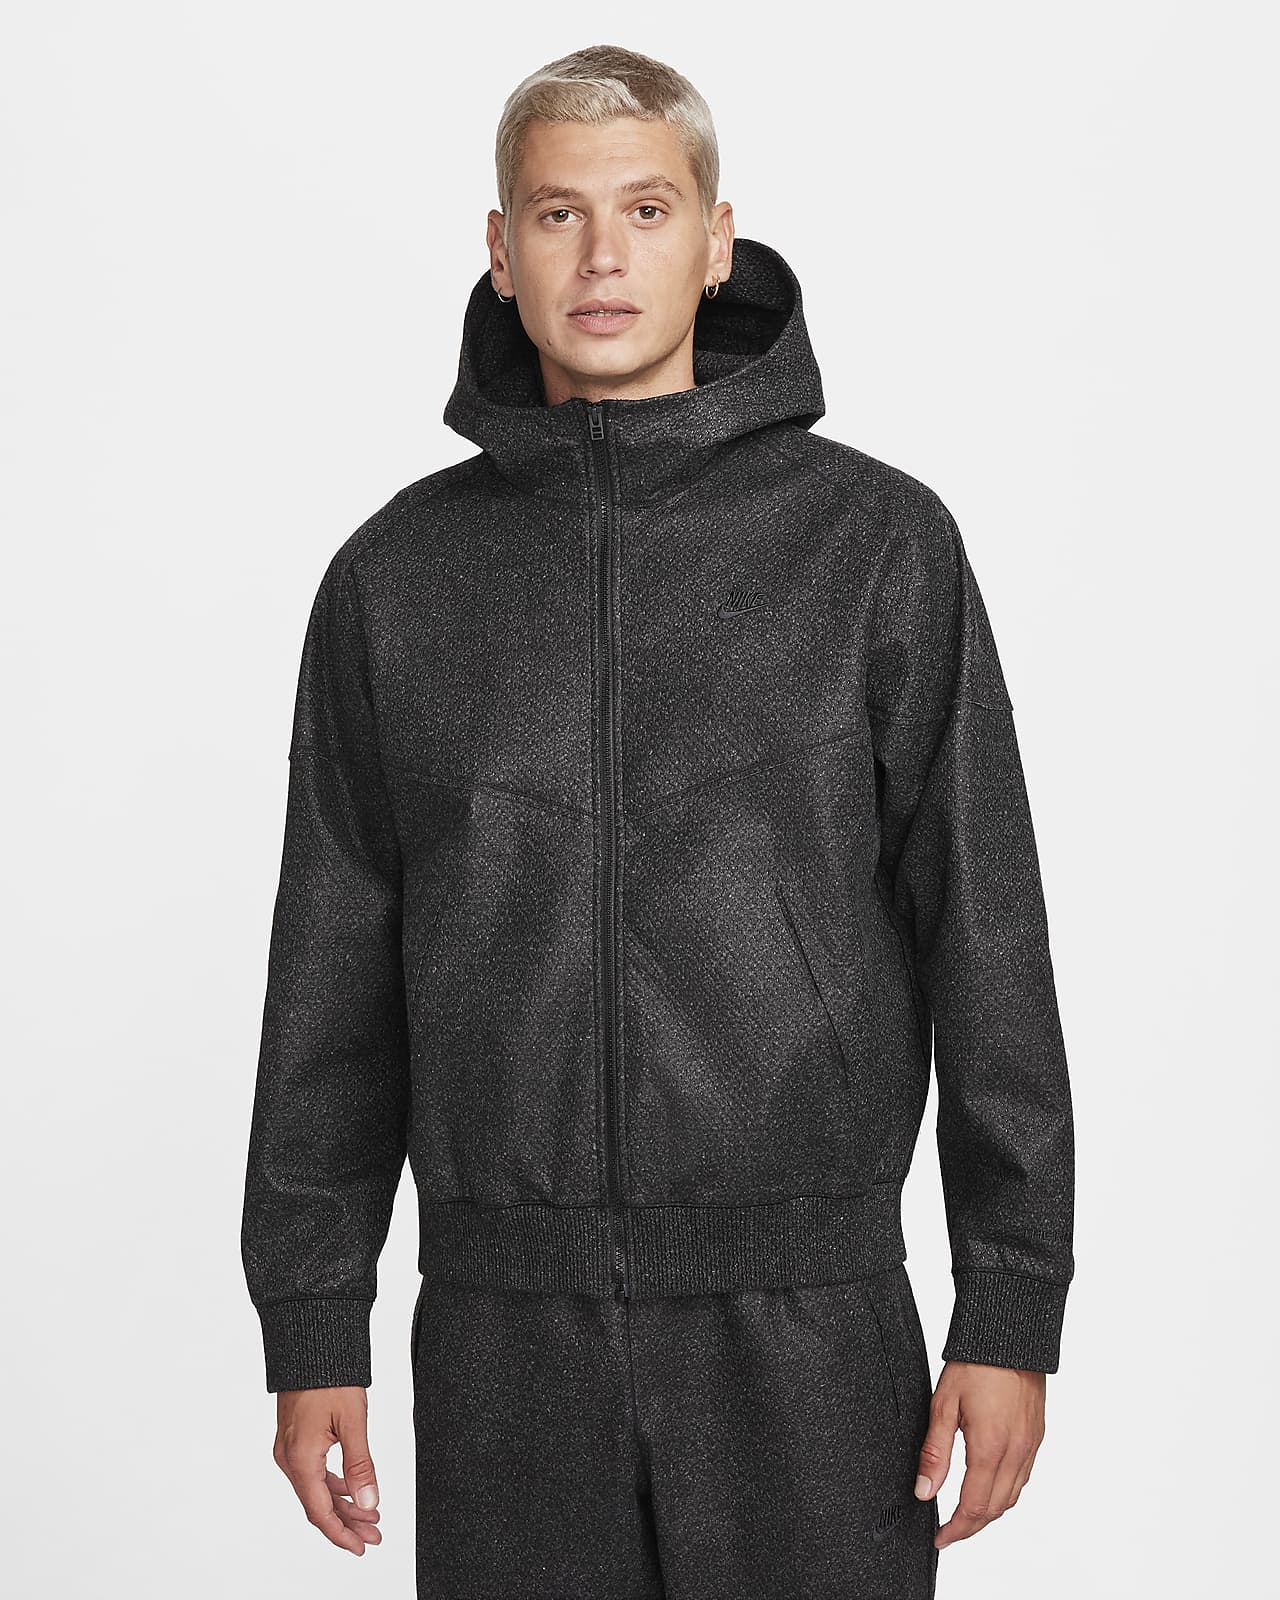 adidas Originals multi logo hoodie in black space tech